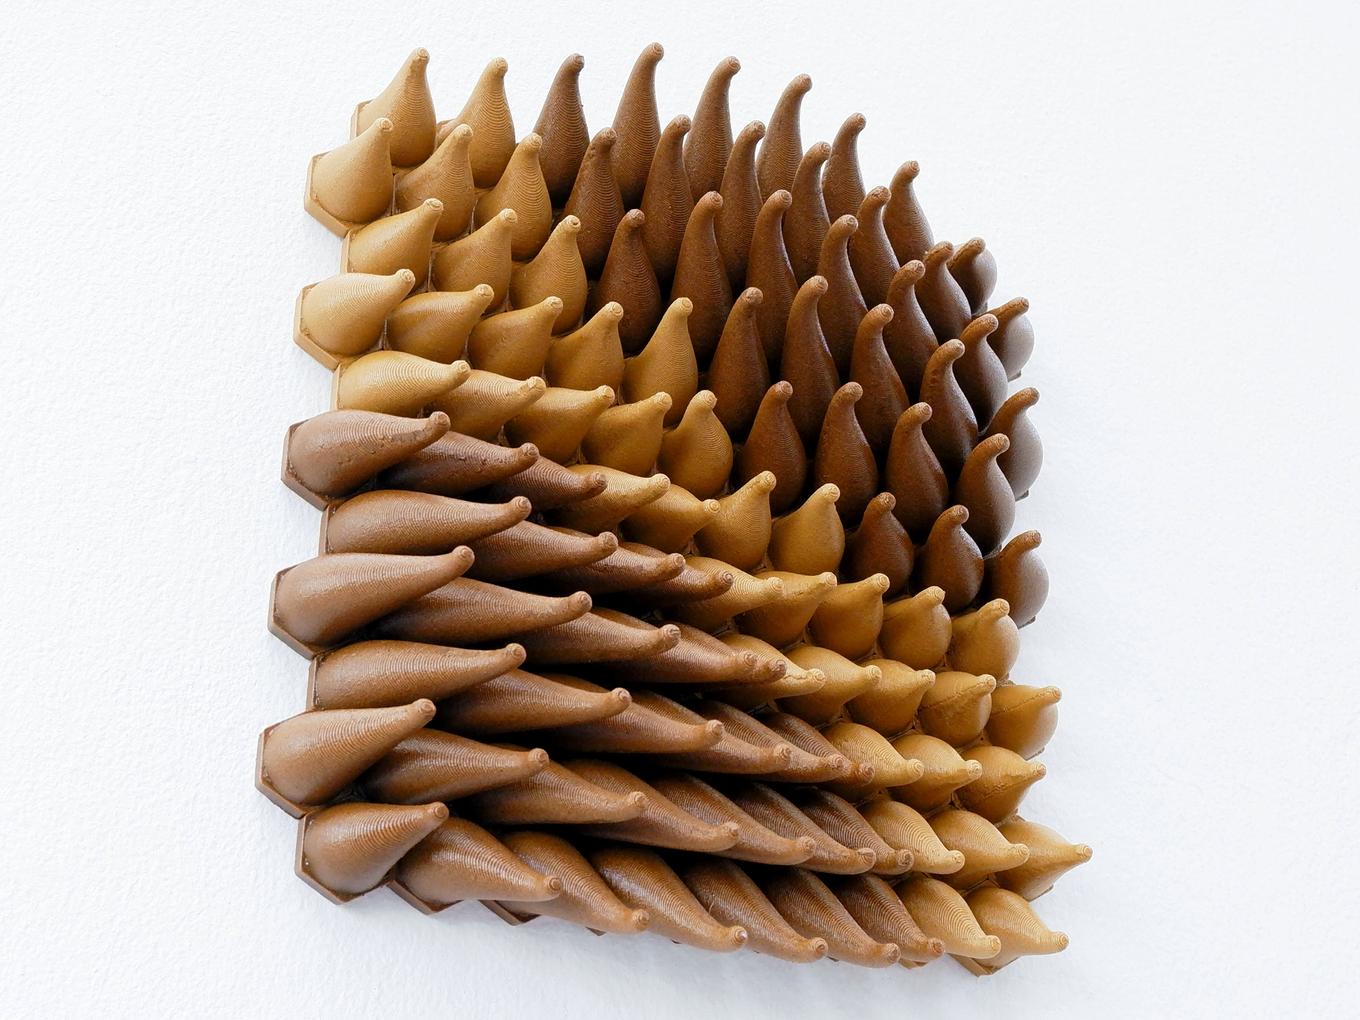 Wooden Sweepy Sprouts | Herschel Shapiro | Contemporary Wall Sculpture